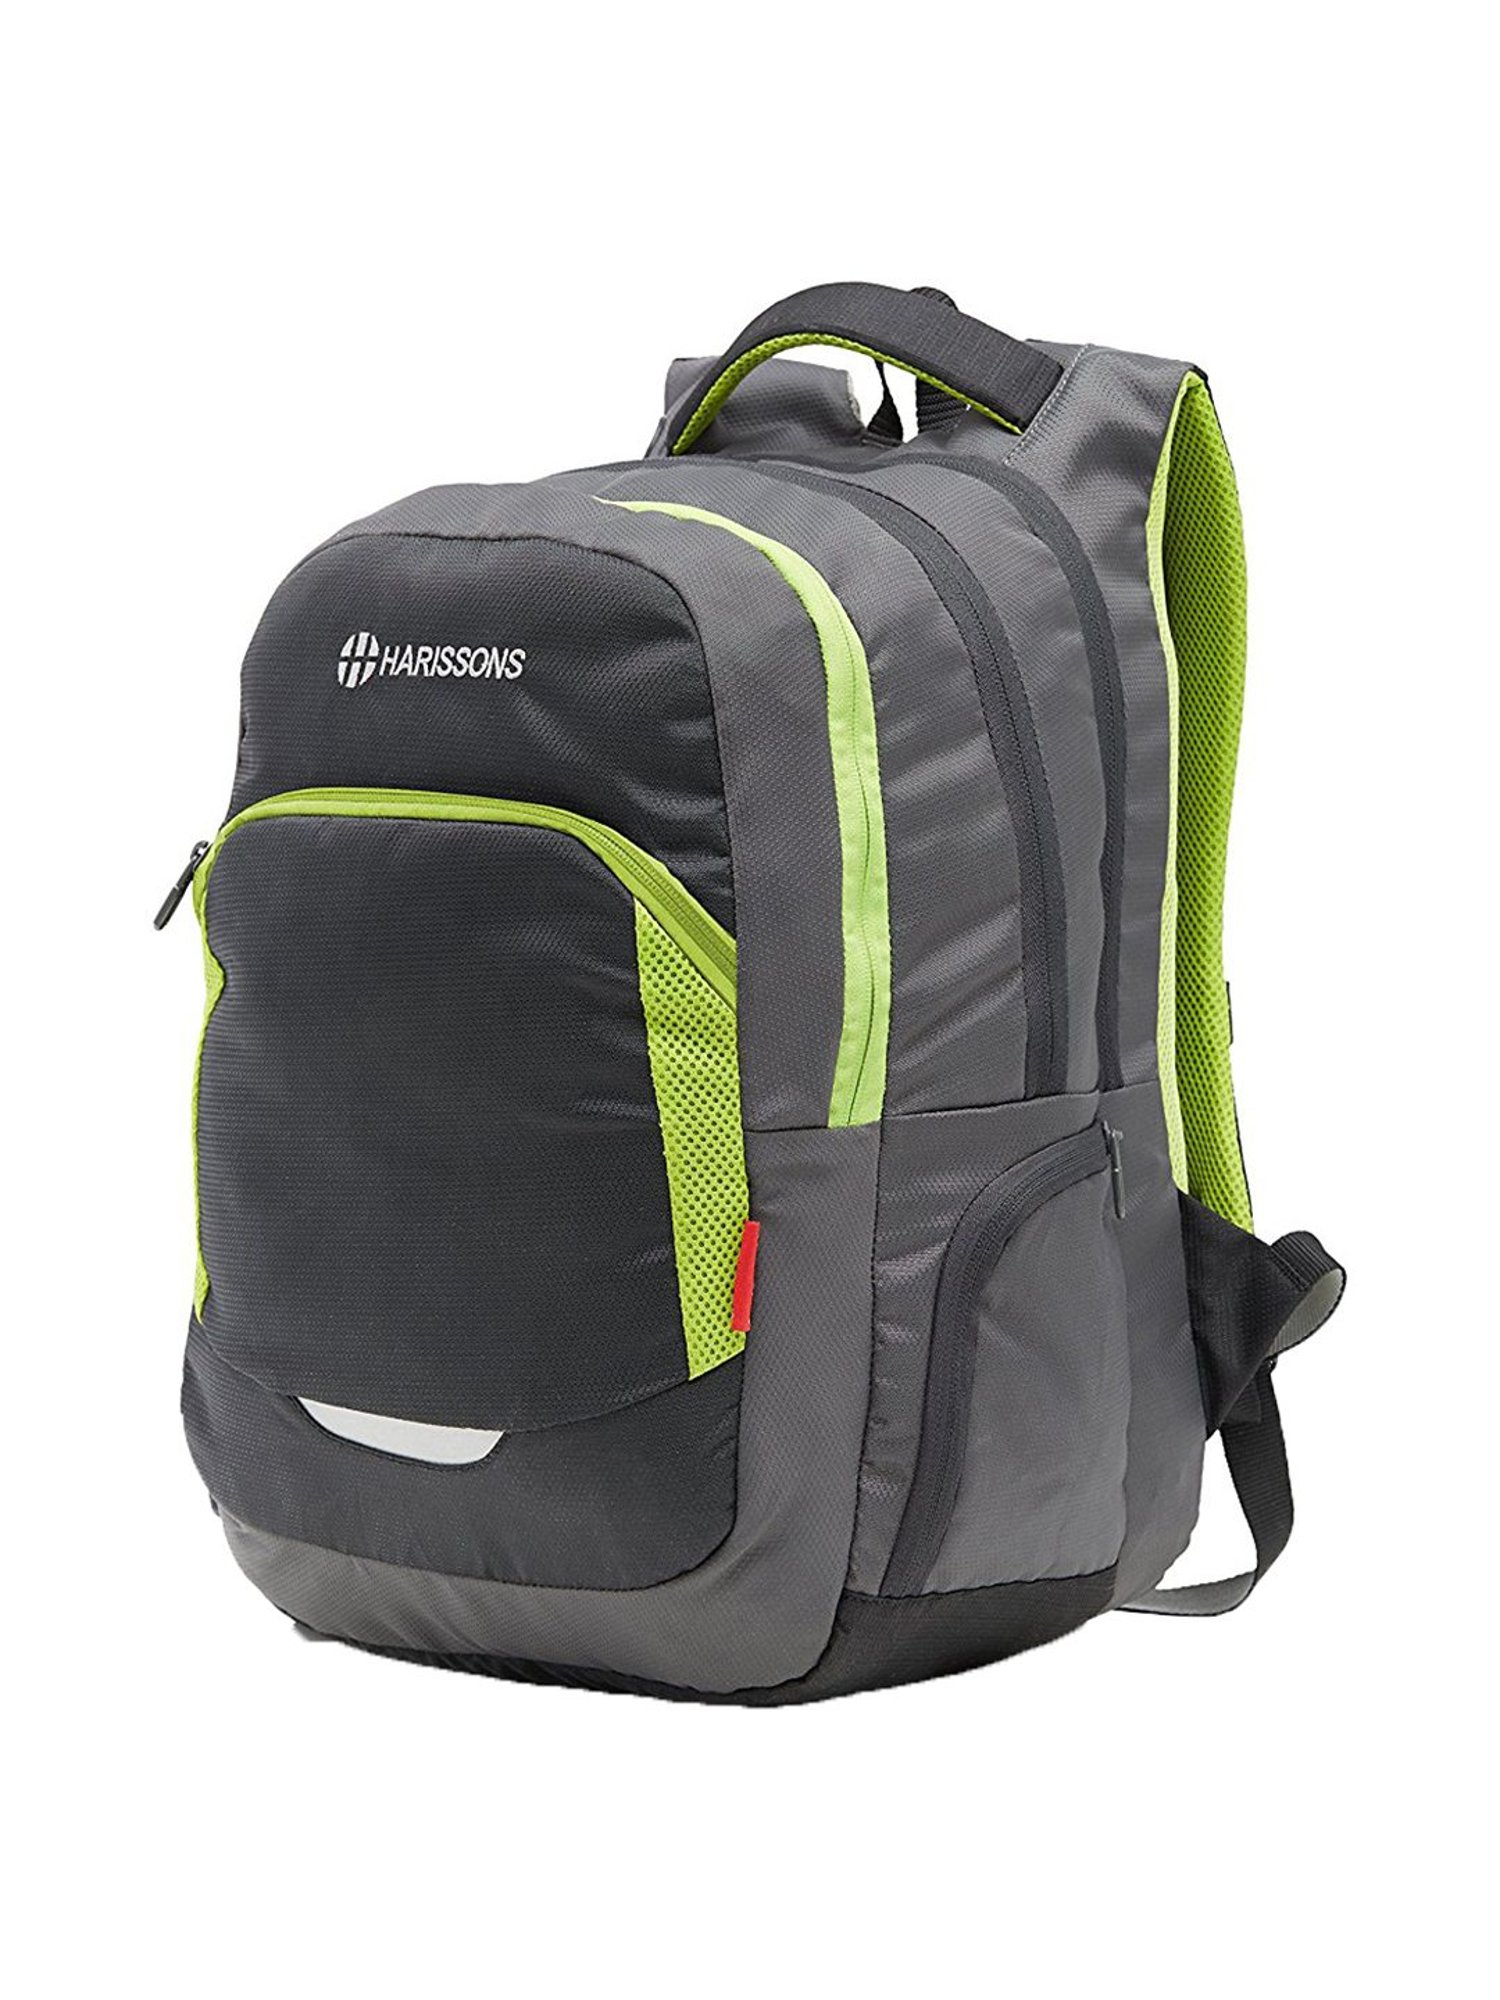 VERVO - Premium Laptop Backpack